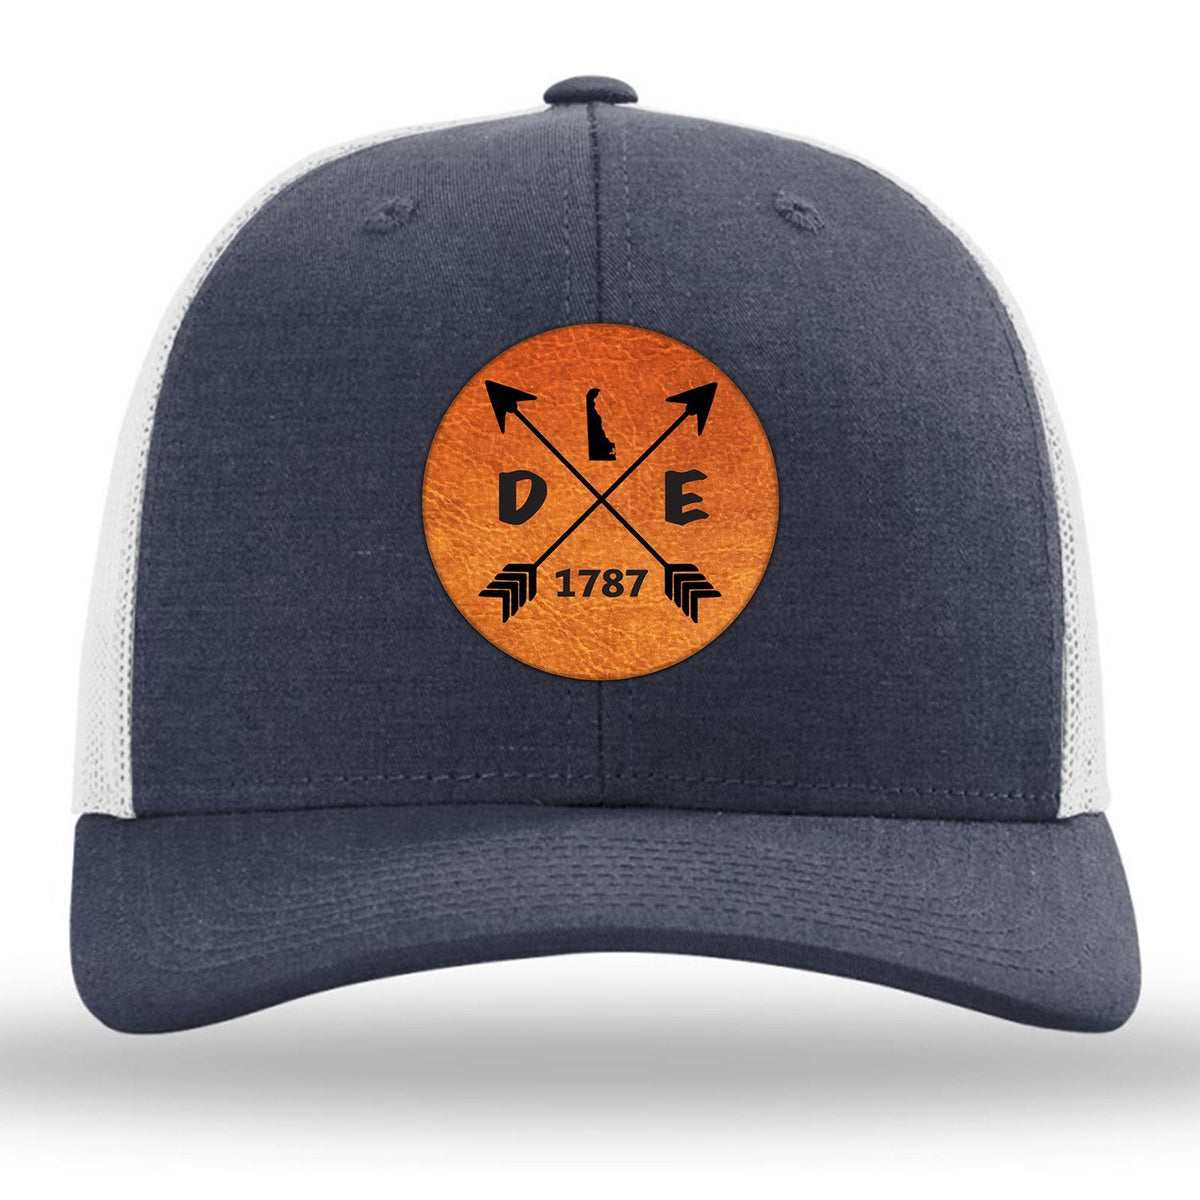 Delaware State Arrows - Leather Patch Trucker Hat